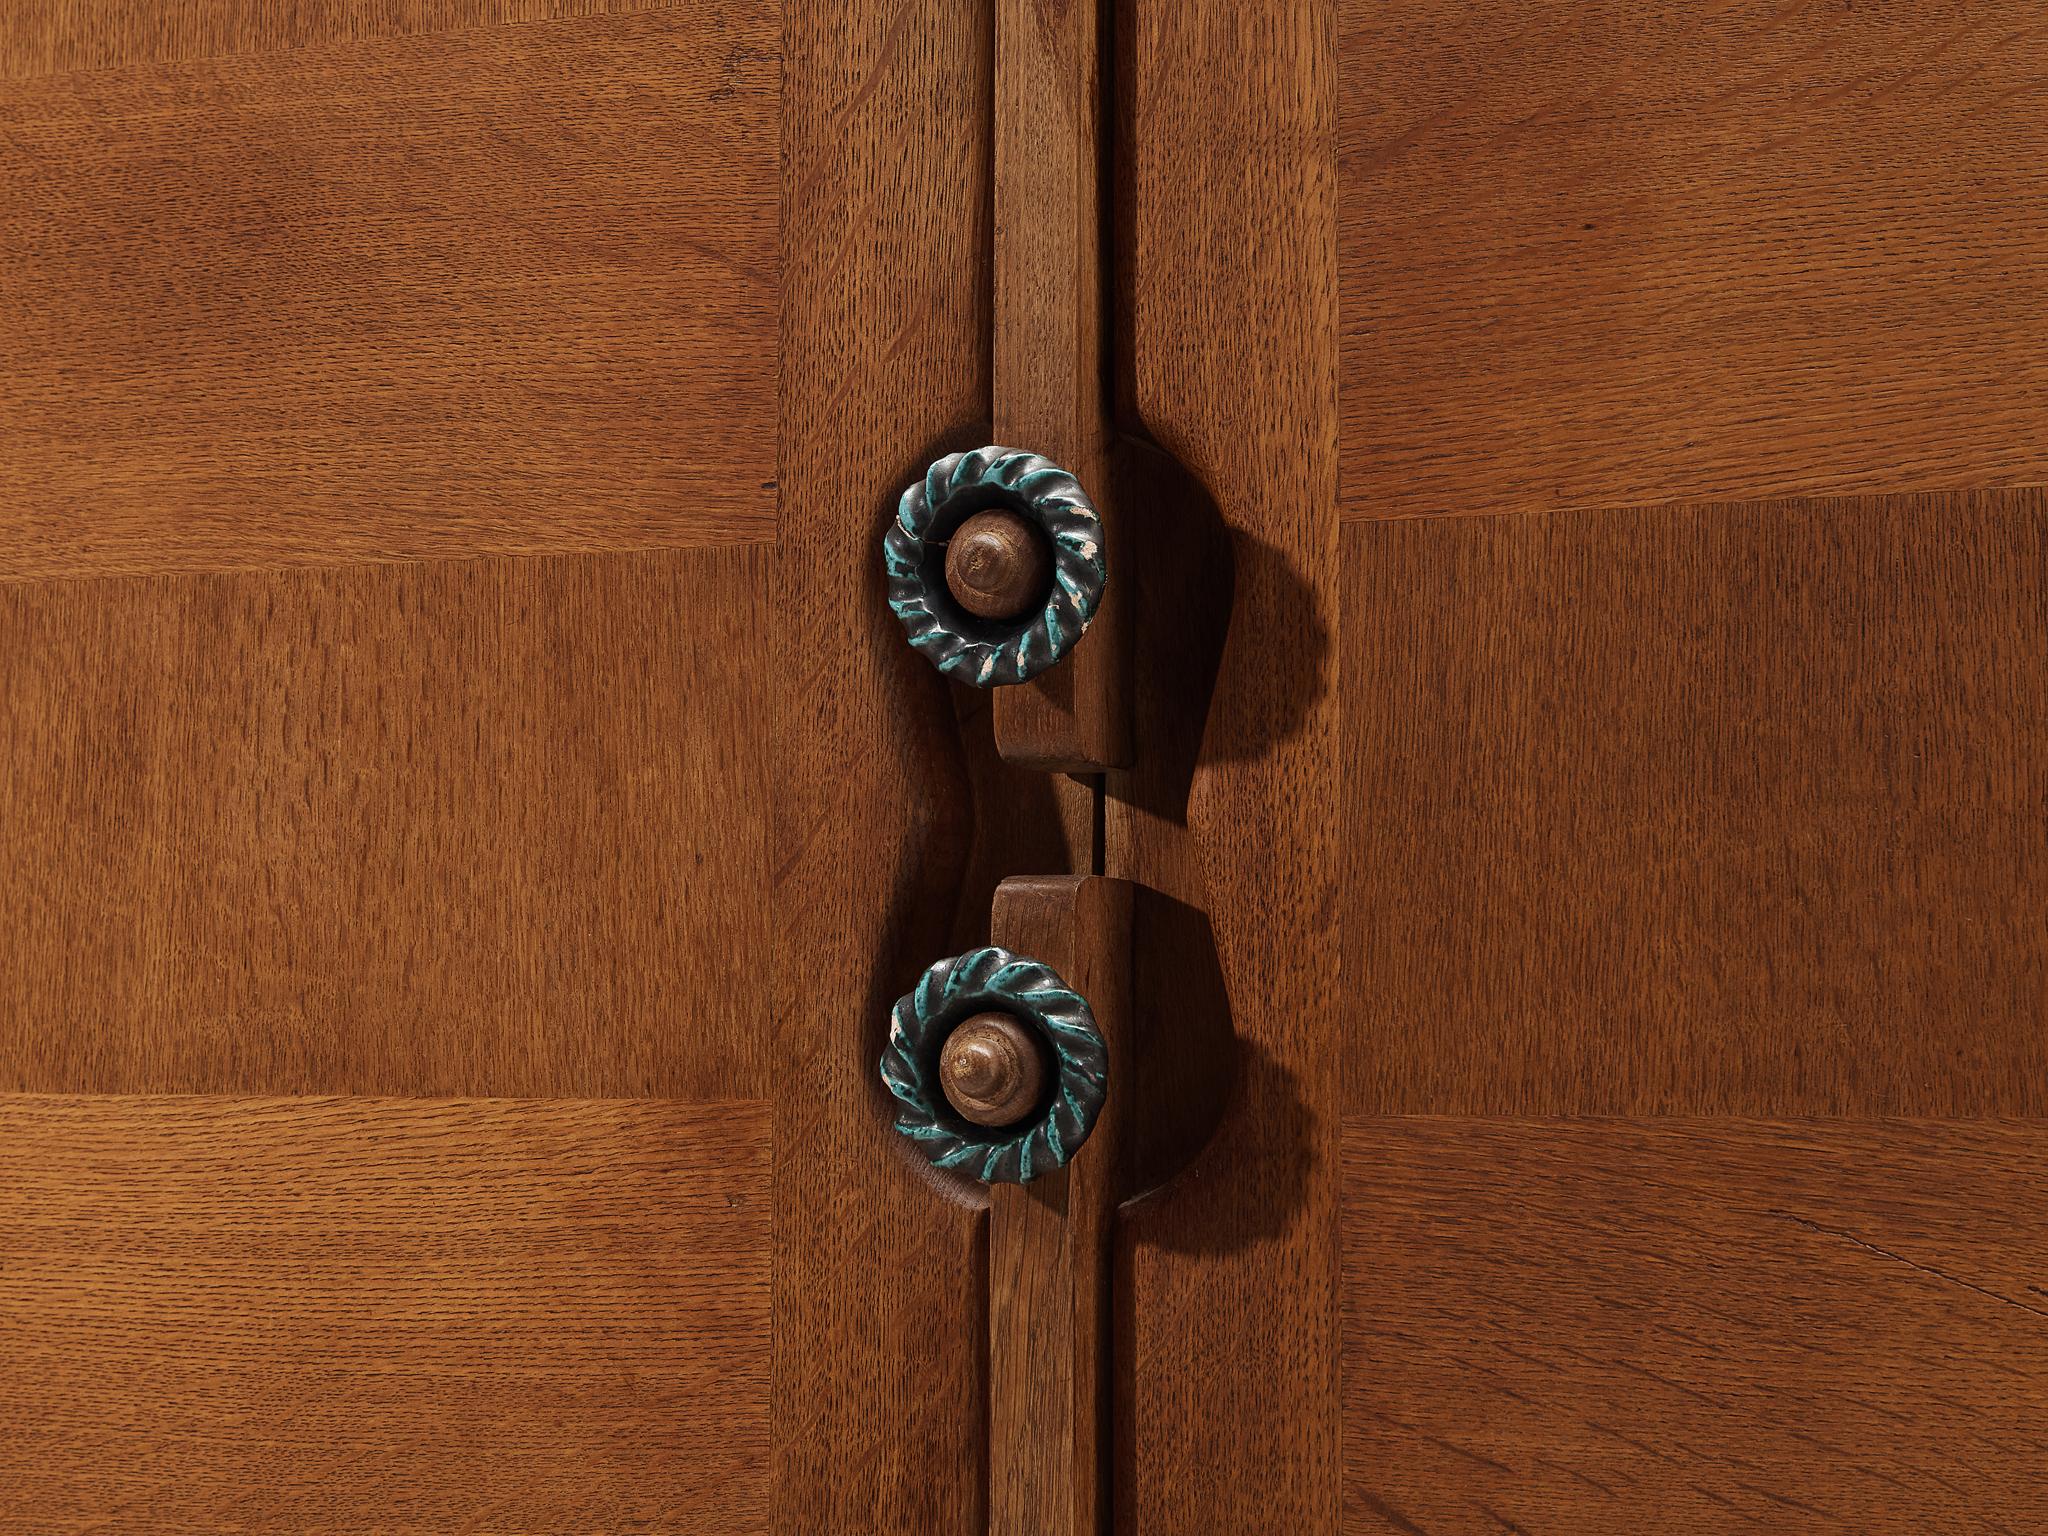 armoire handles